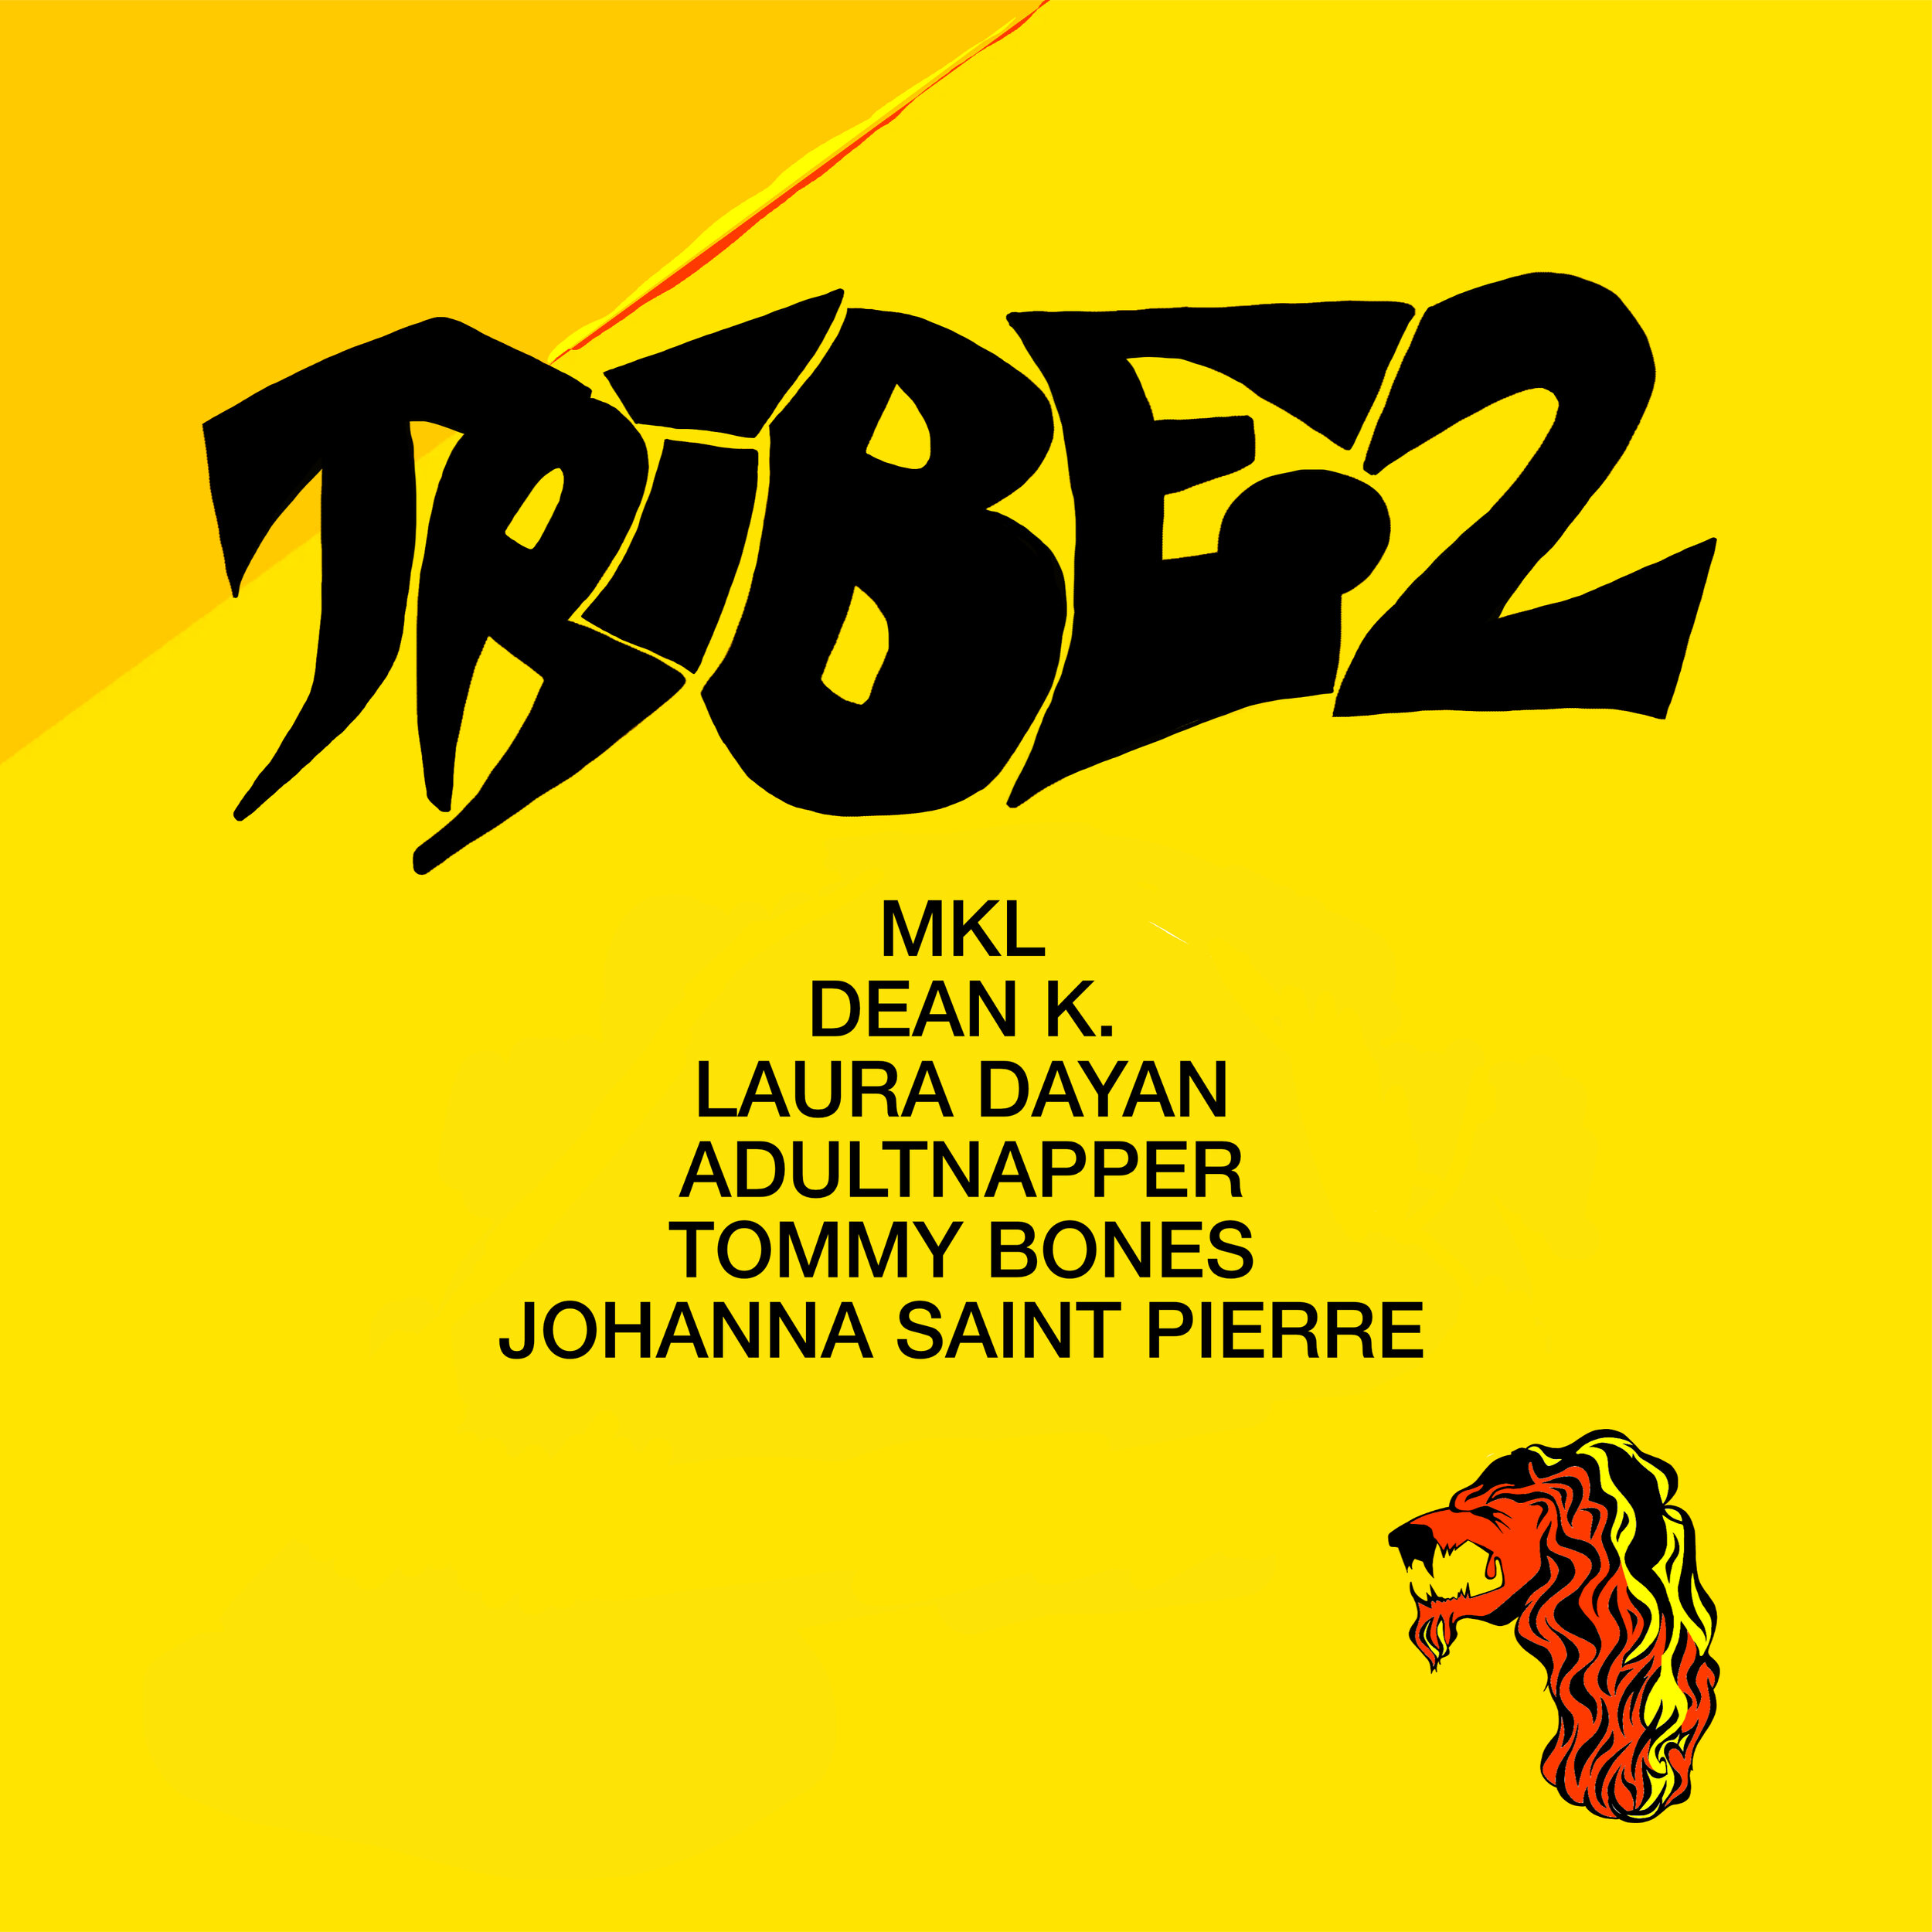 Tribe 2